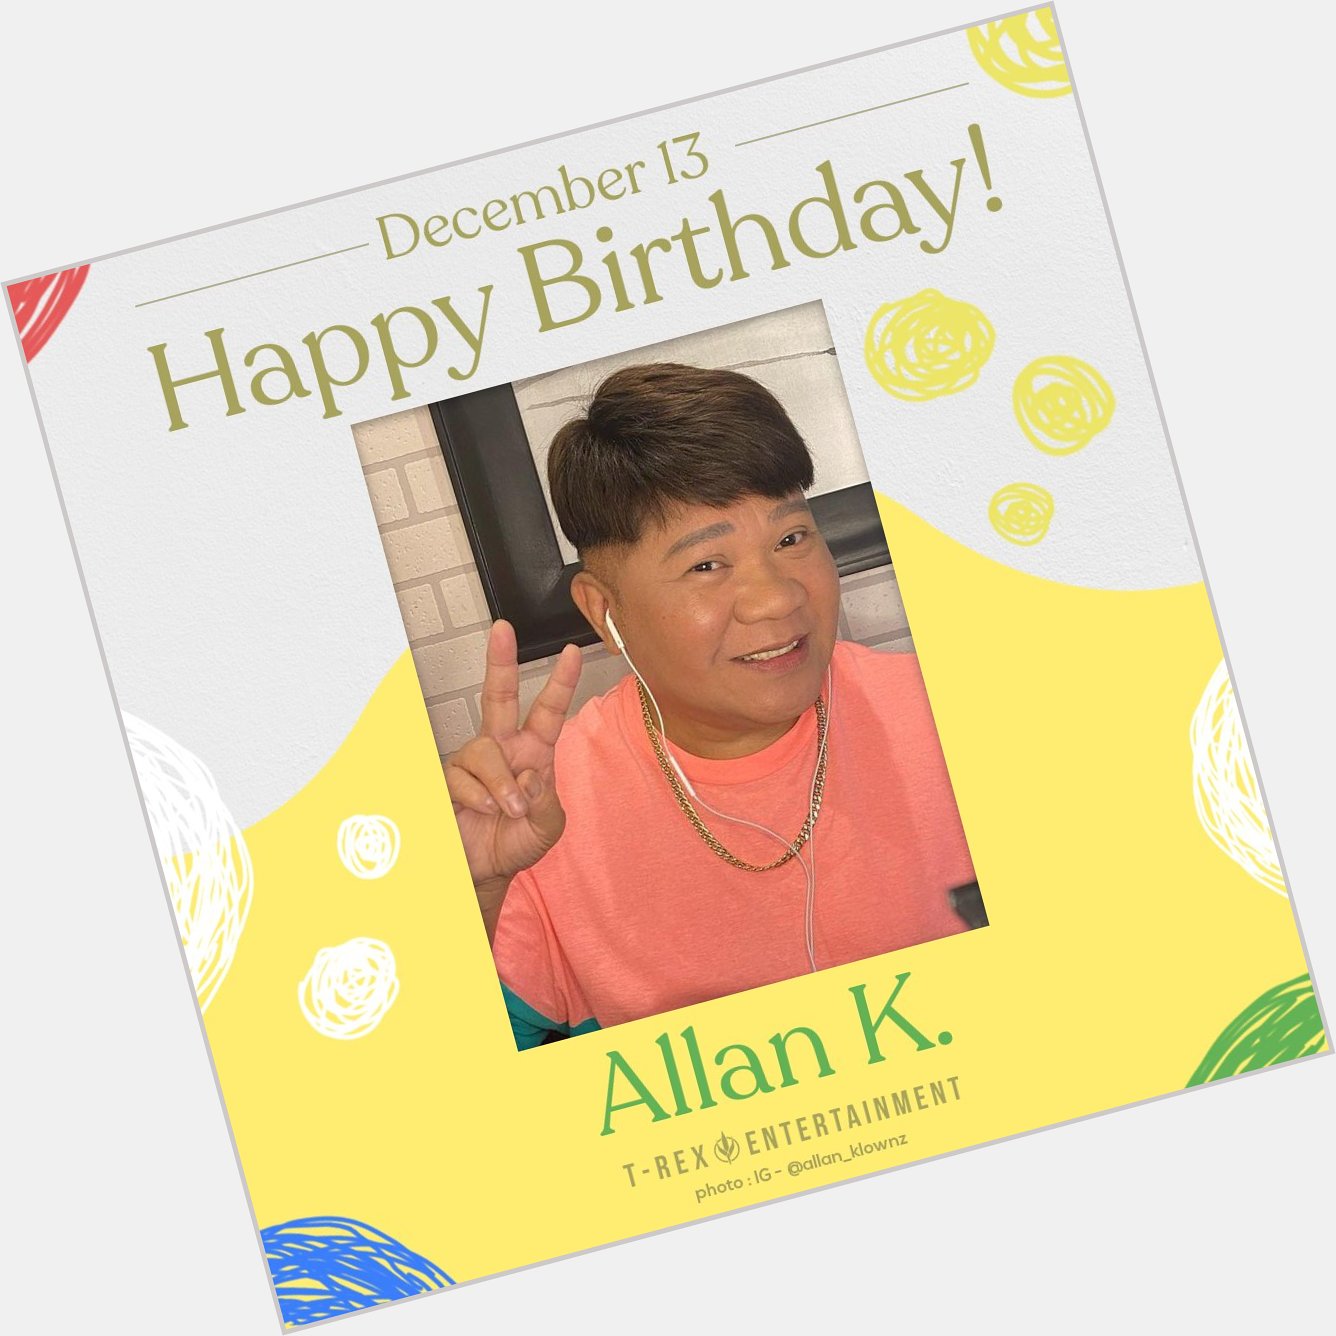 Happy belated birthday to you, Allan K We wish you well! 